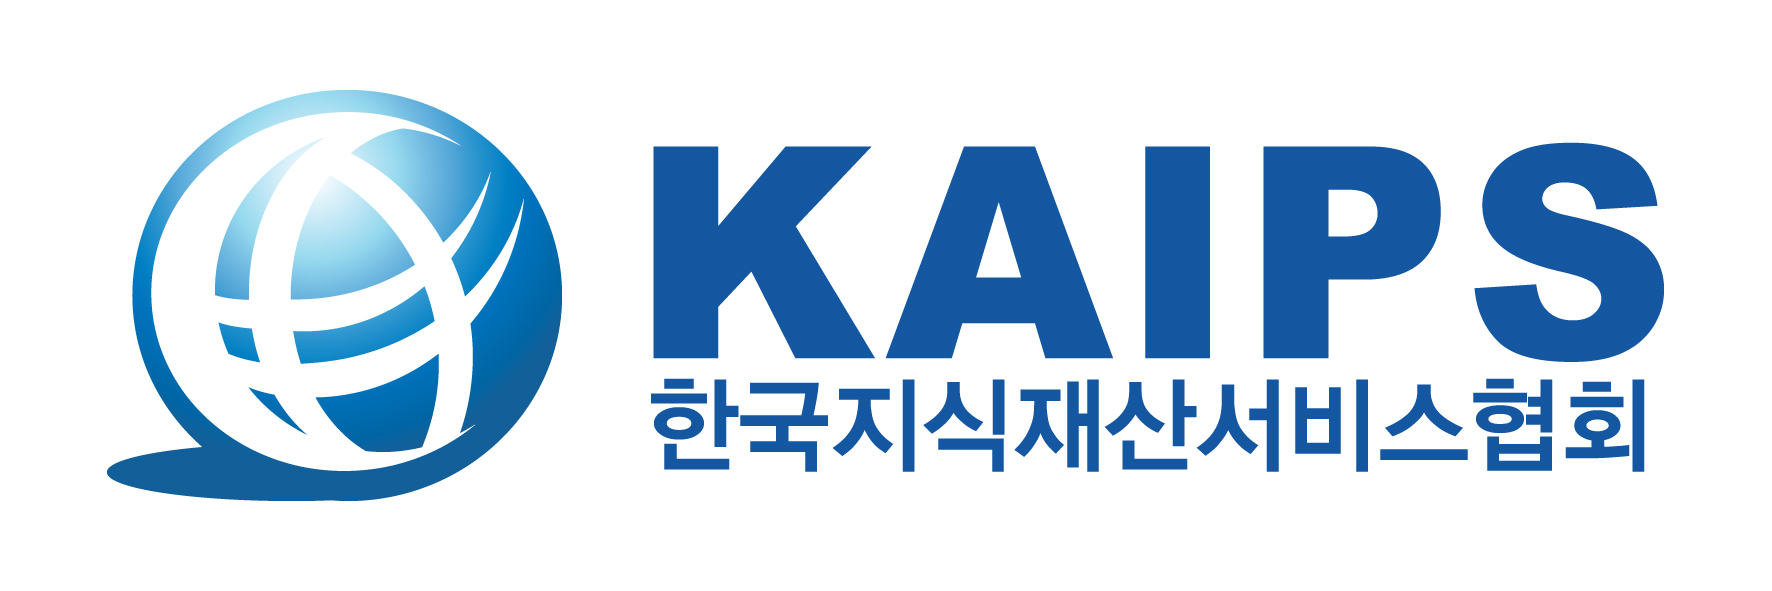 Korean Association for Intellectual Property Services